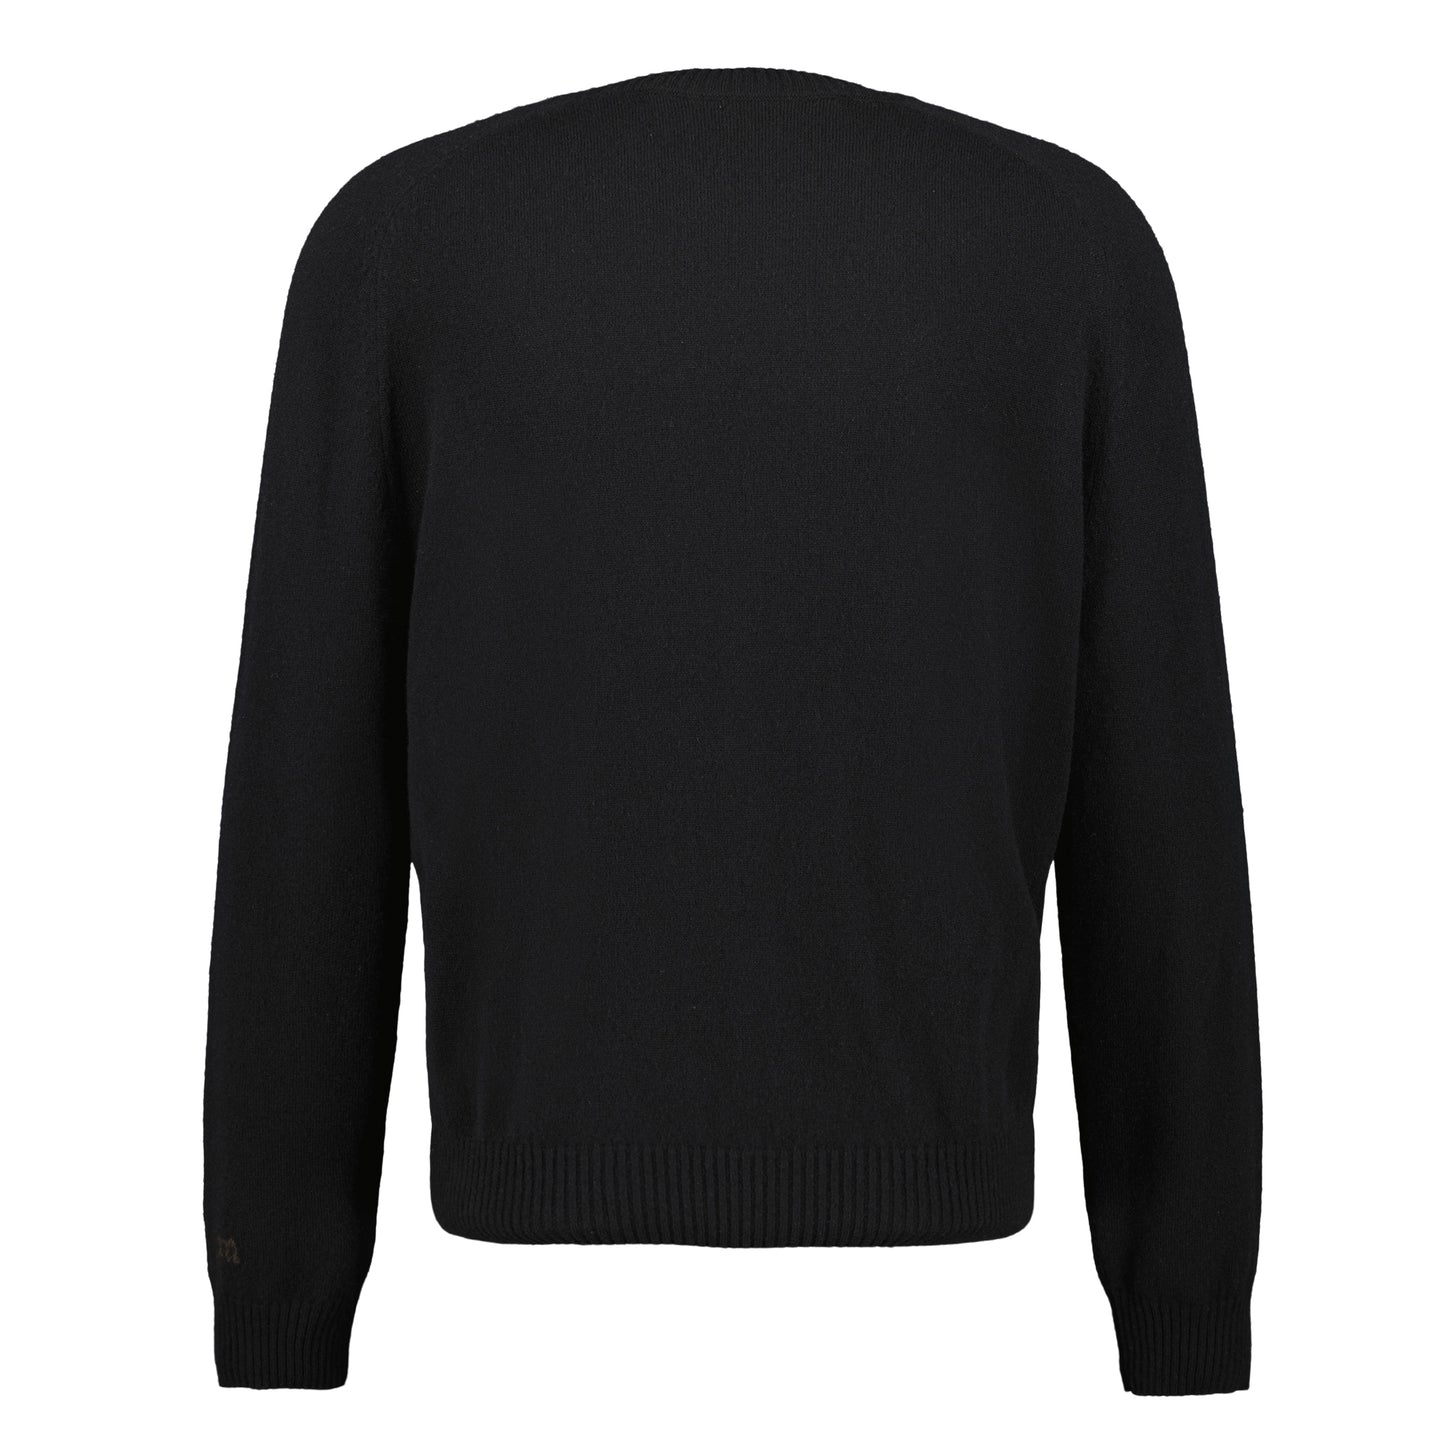 Jack Crew Neck Cashmere Sweater Black